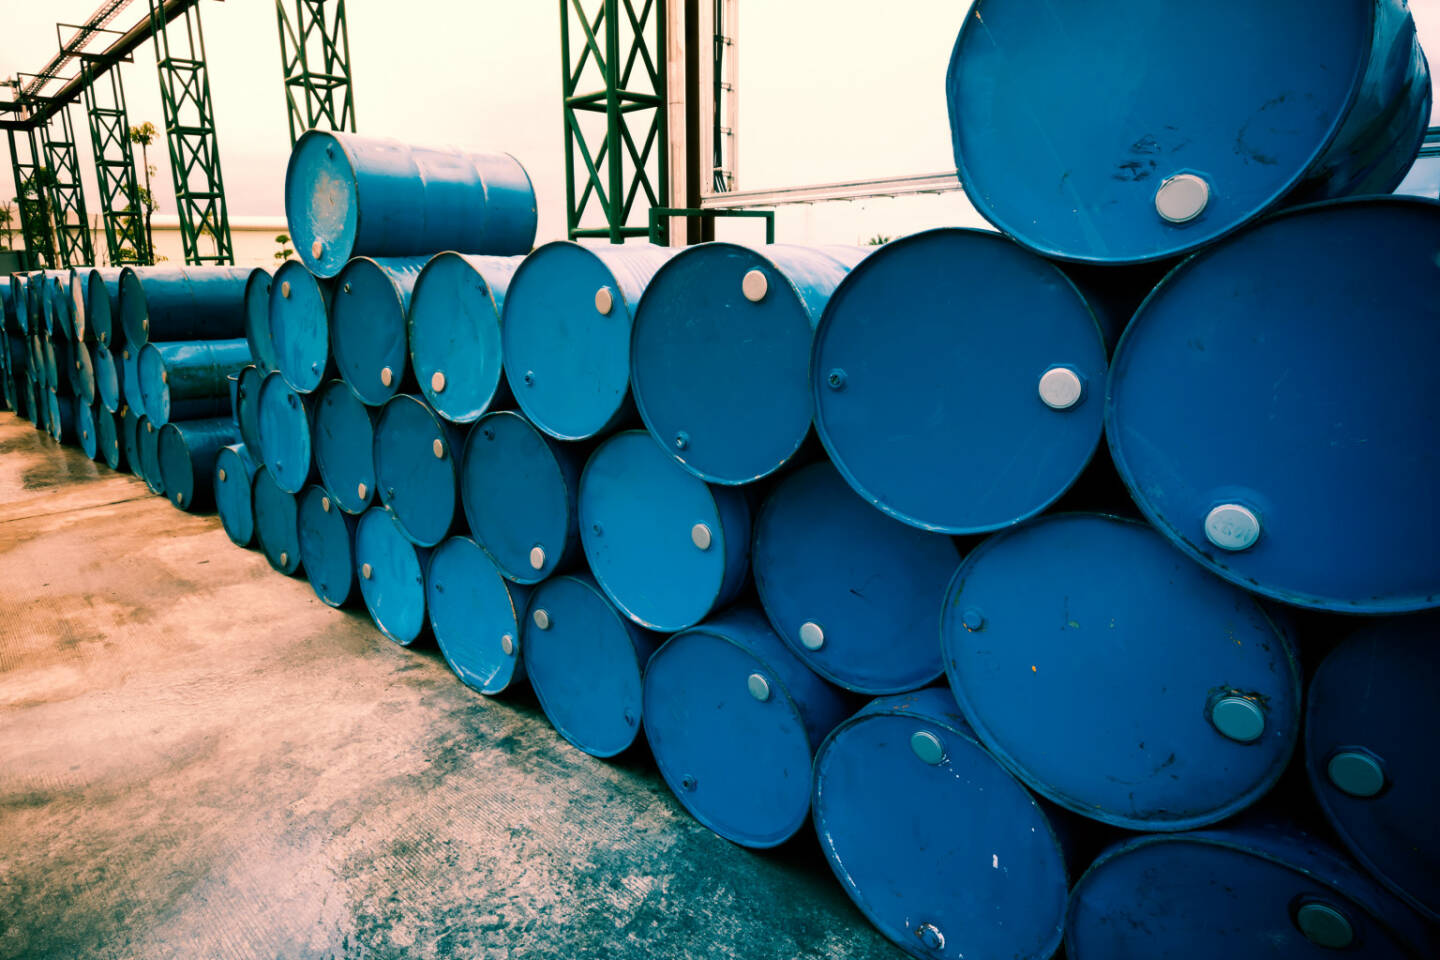 Öl, Erdöl, Ölfässer http://www.shutterstock.com/de/pic-316027709/stock-photo-industry-oil-barrels-or-chemical-drums-stacked-up-fillter-image-processed.html